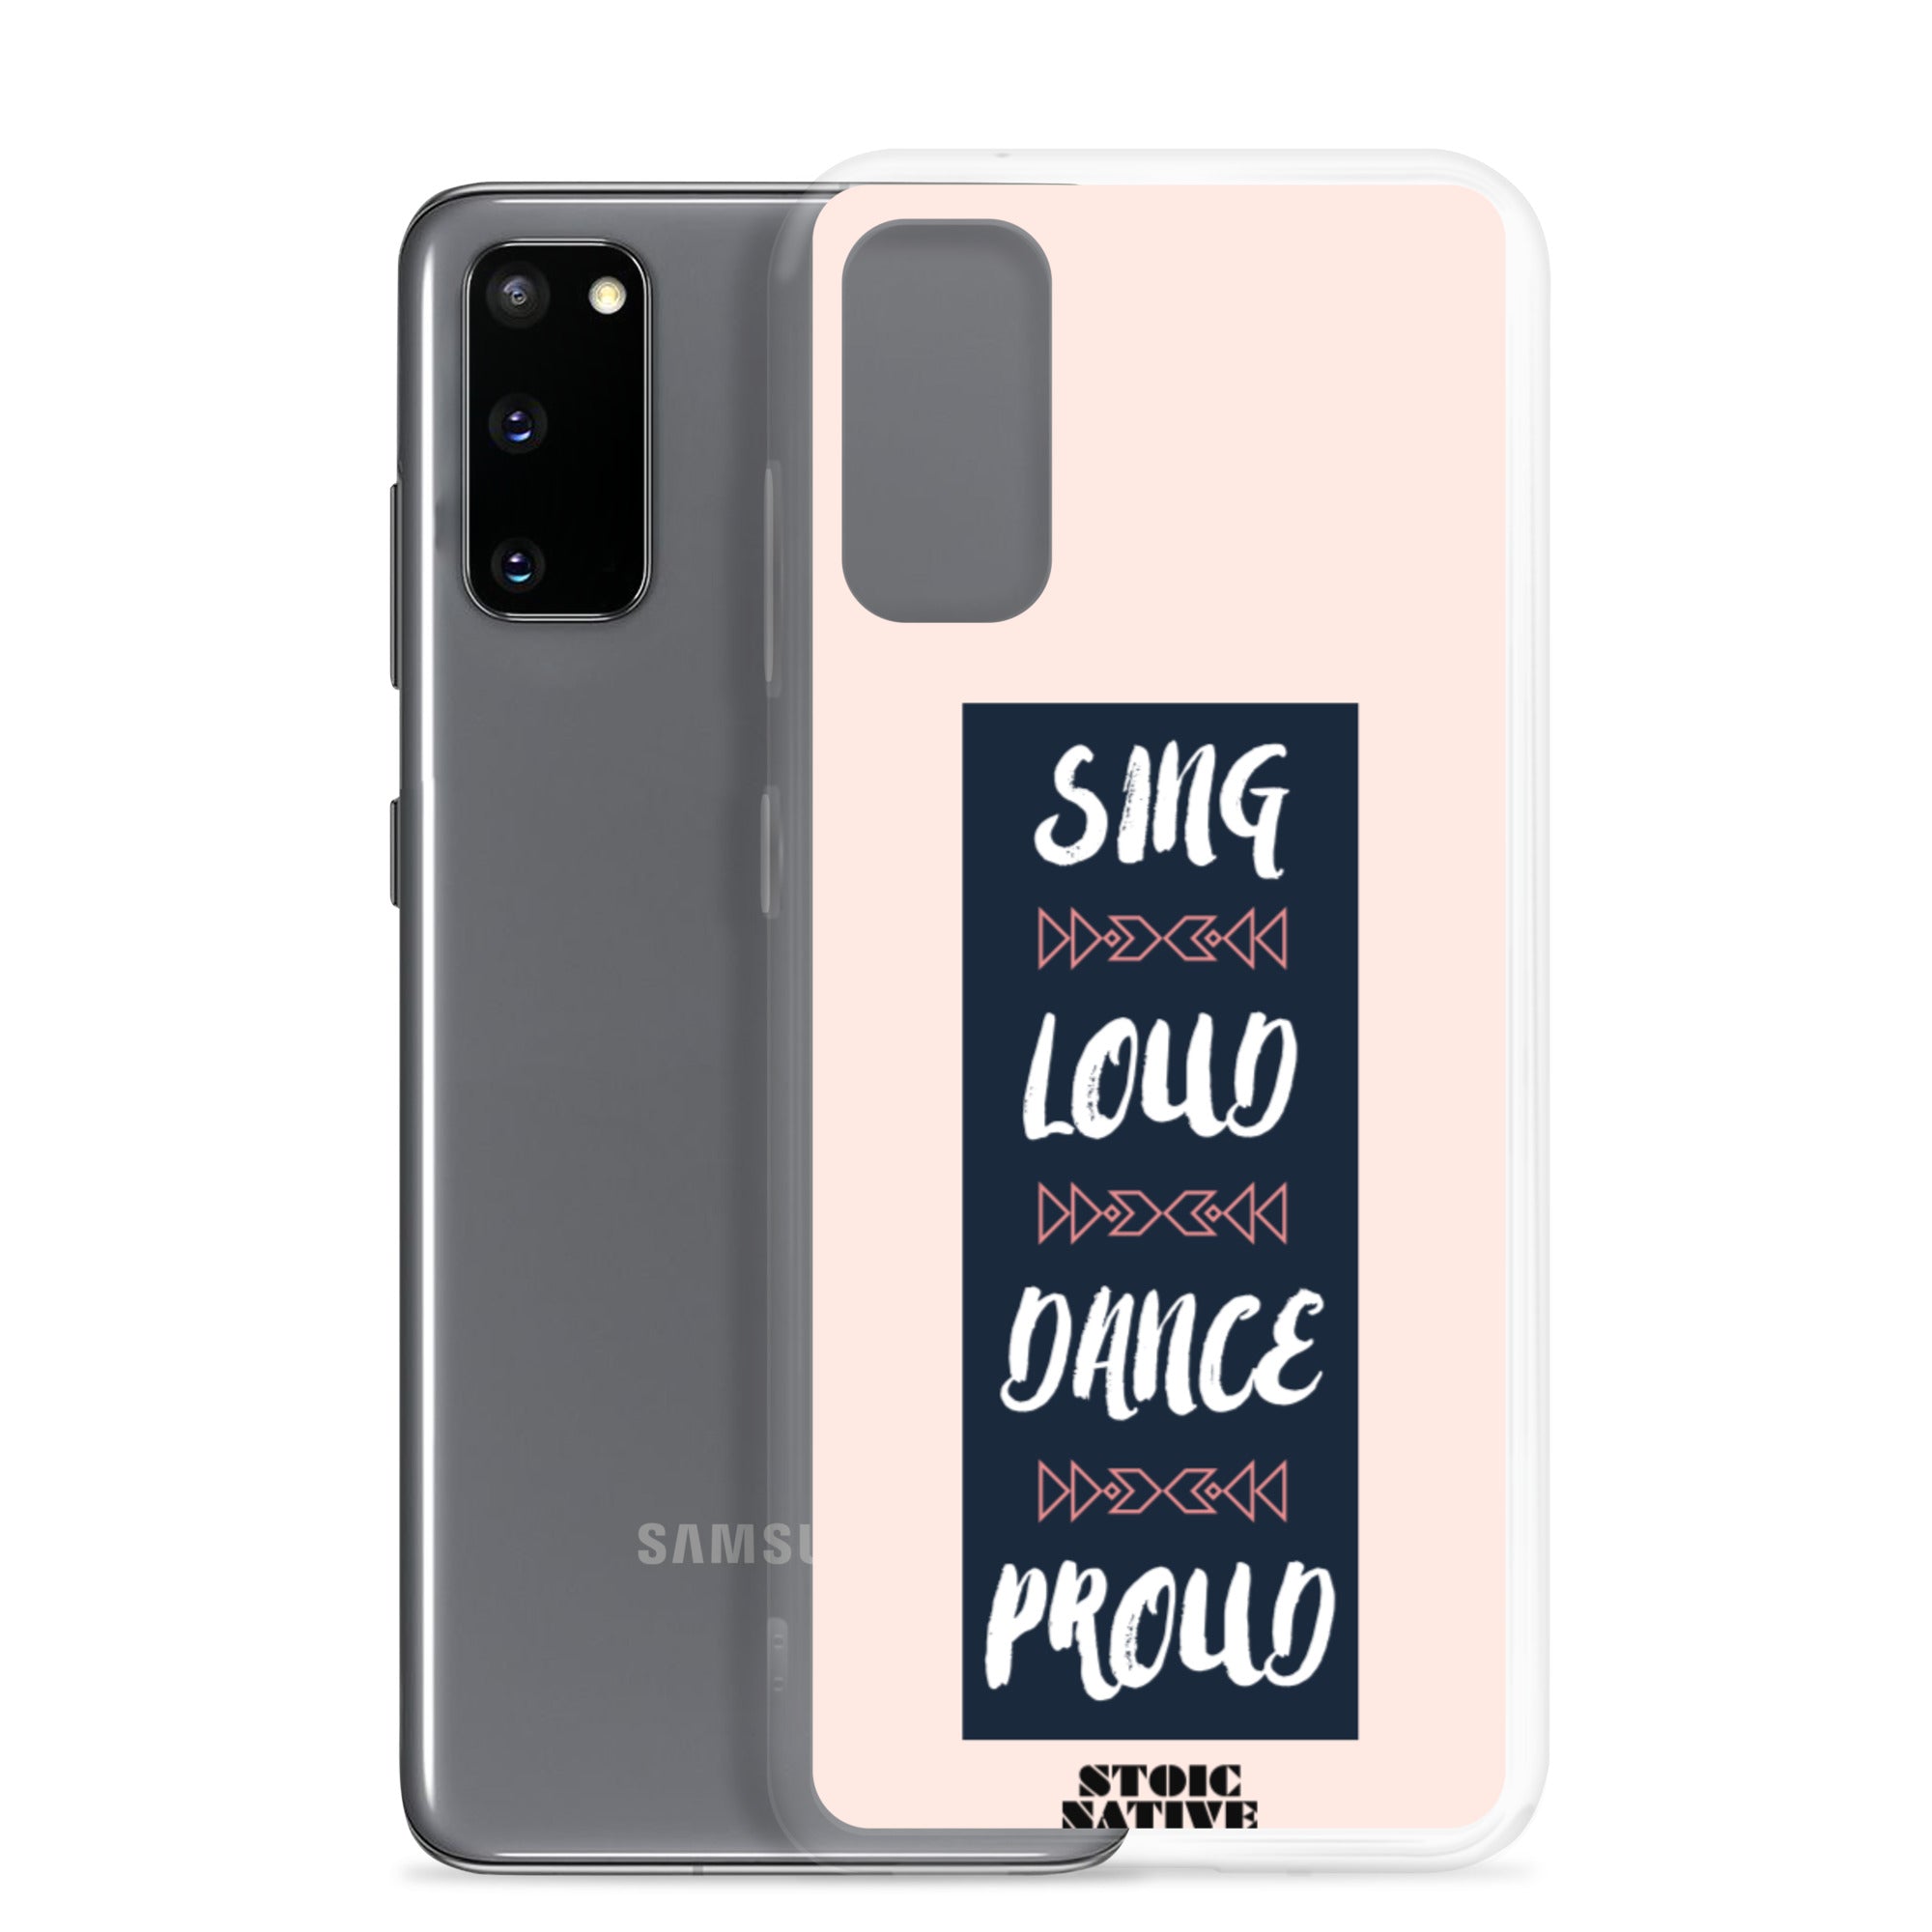 Sing Loud Dance Proud Samsung Case